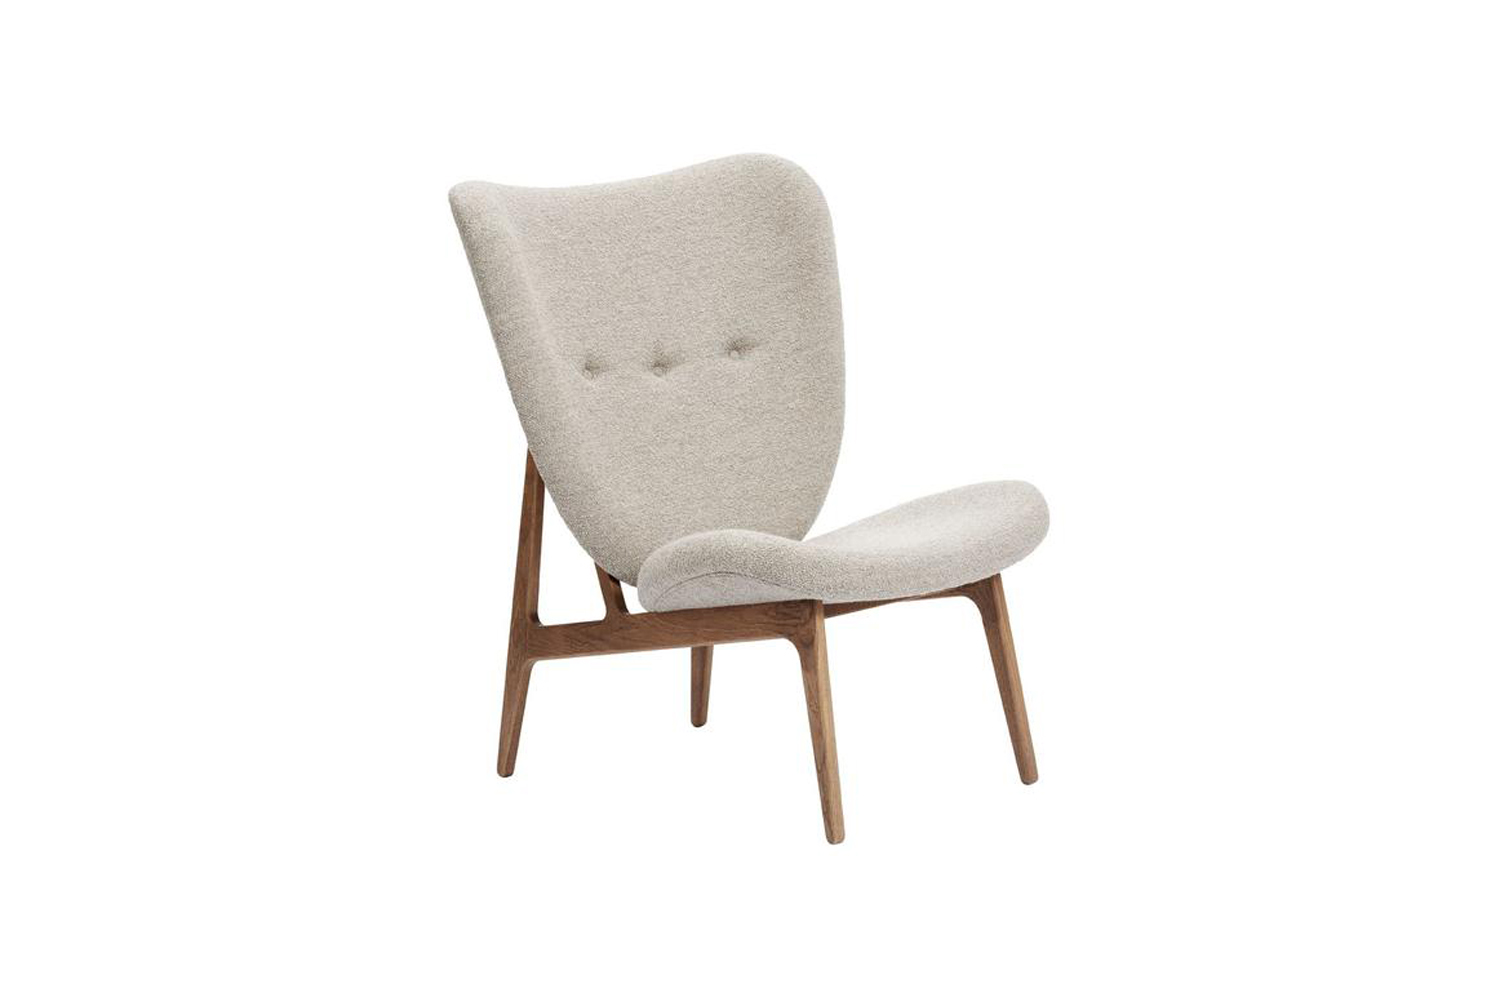 The Hansen Hyldahl Norr11 Elephant Lounge Chair is $2,063.80 at Danish Design Store.